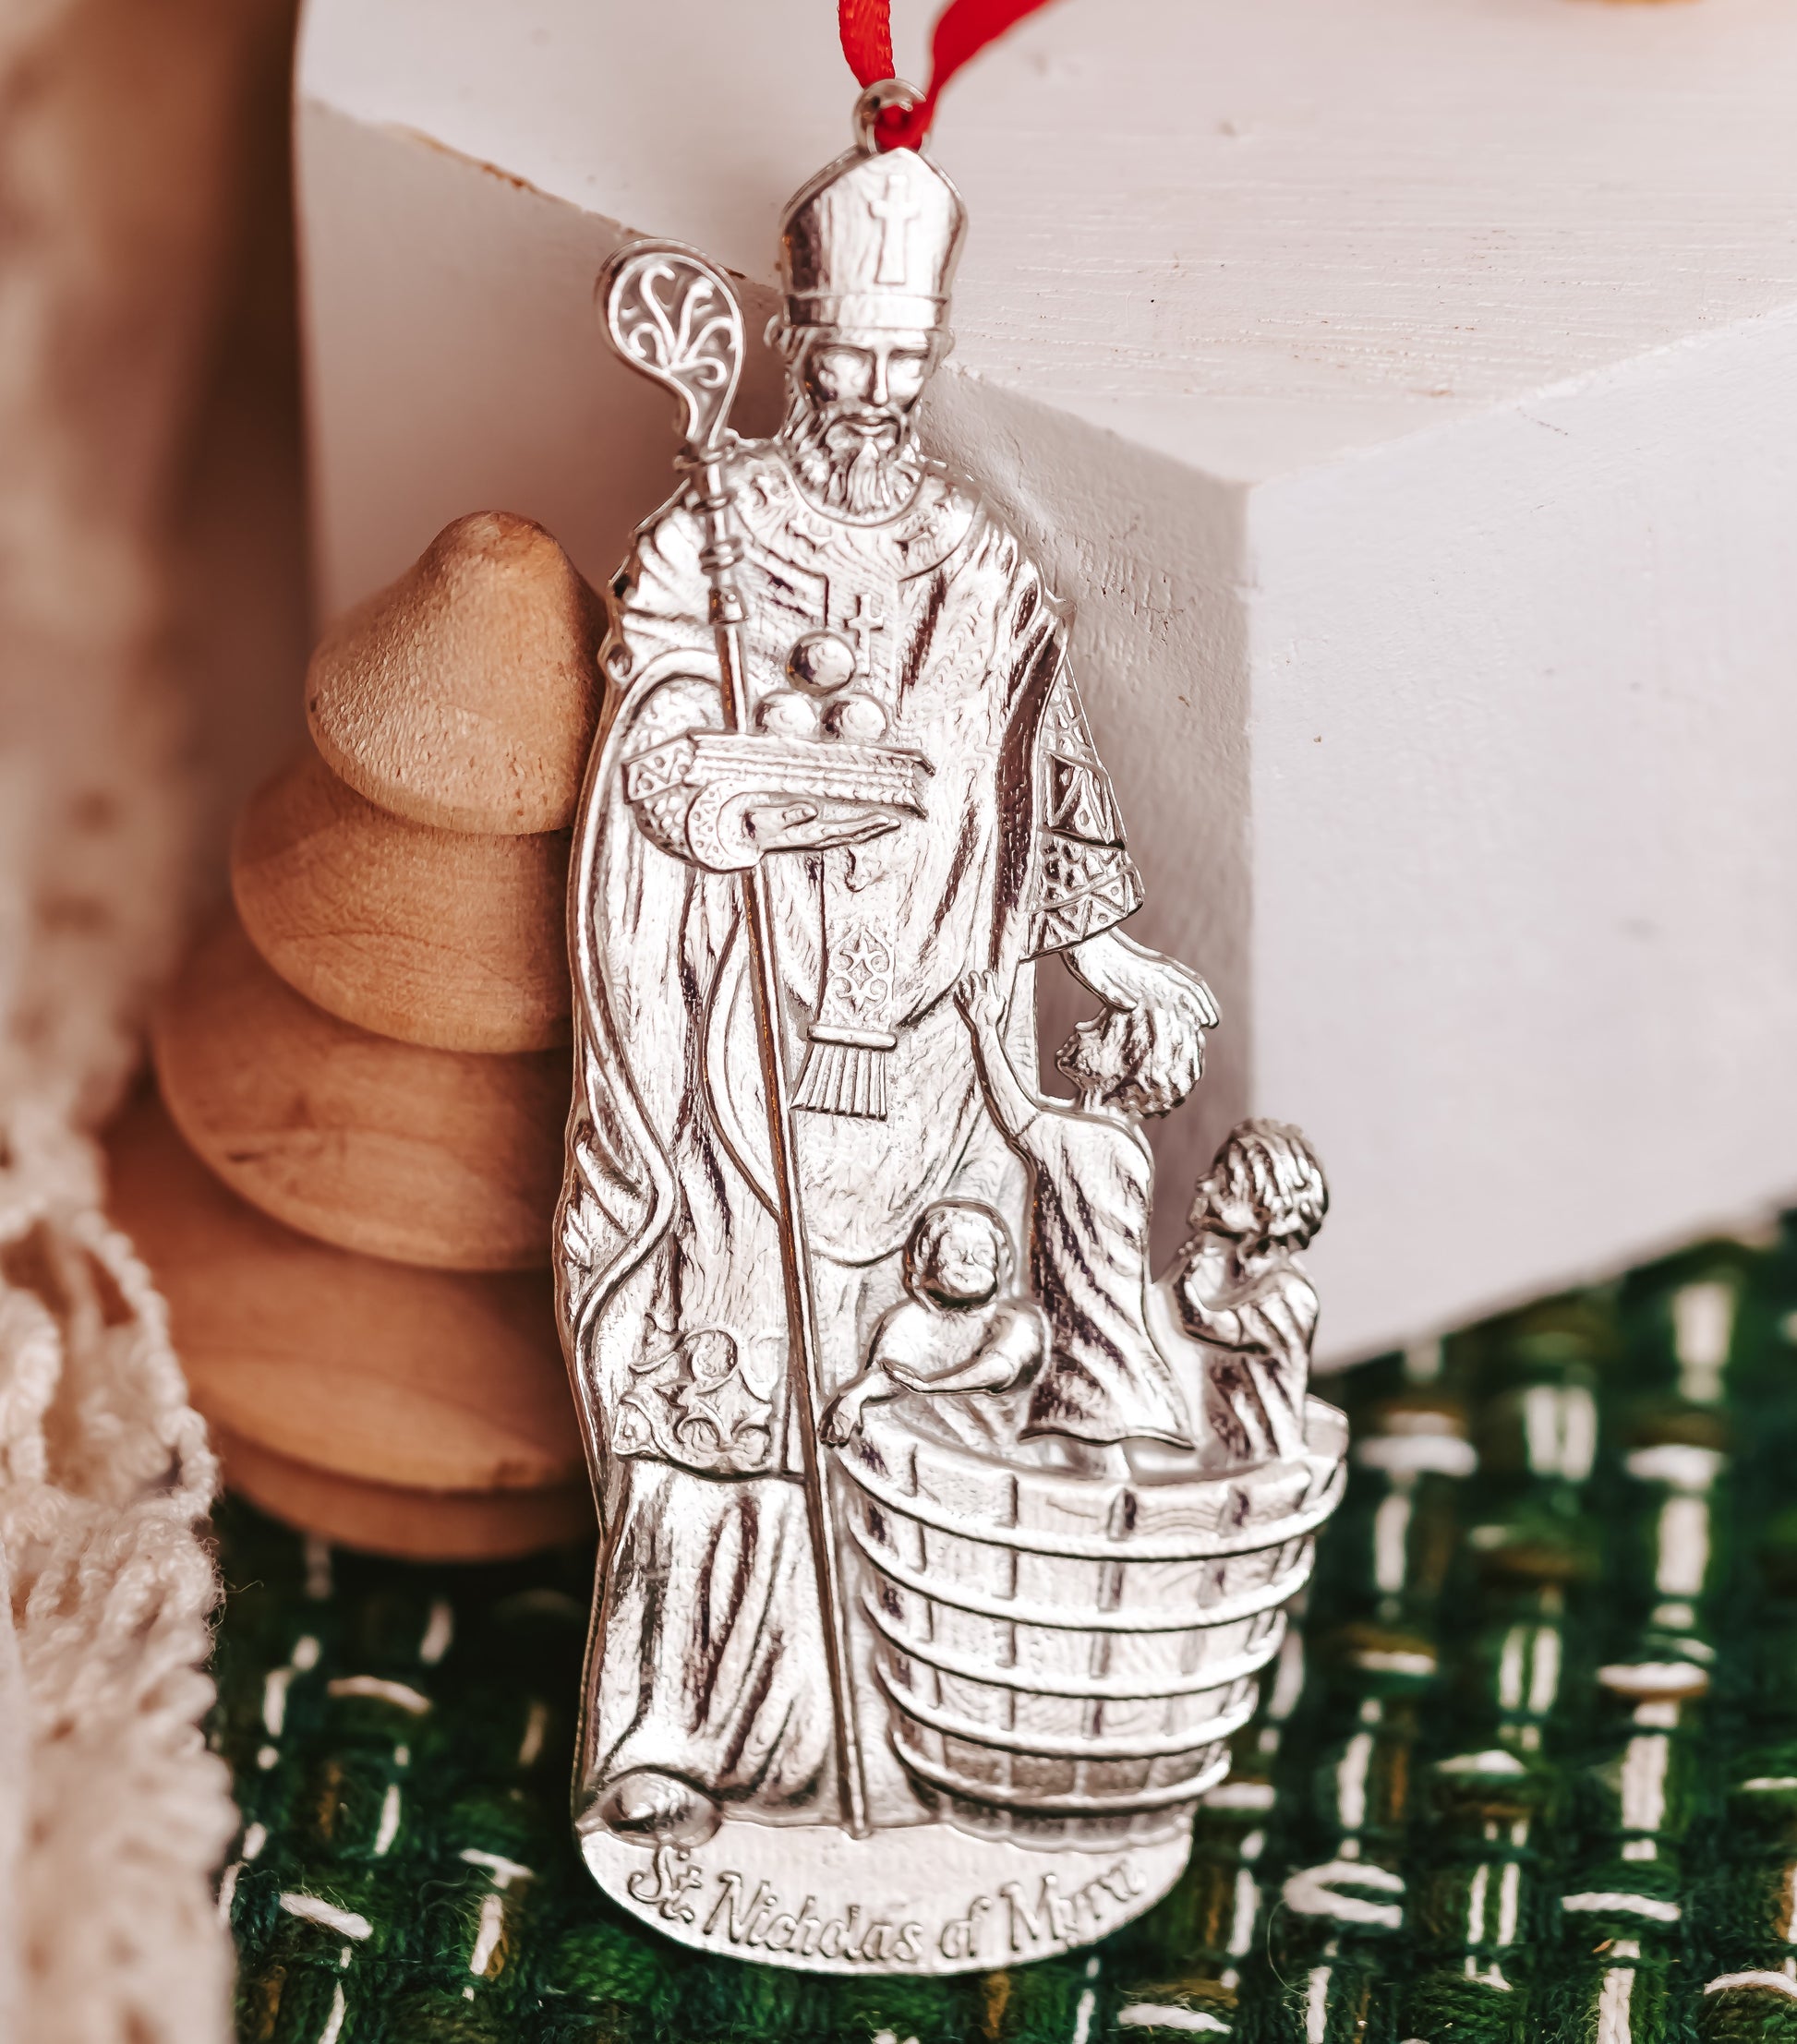 Saint Nicholas of Myra Christmas Ornament